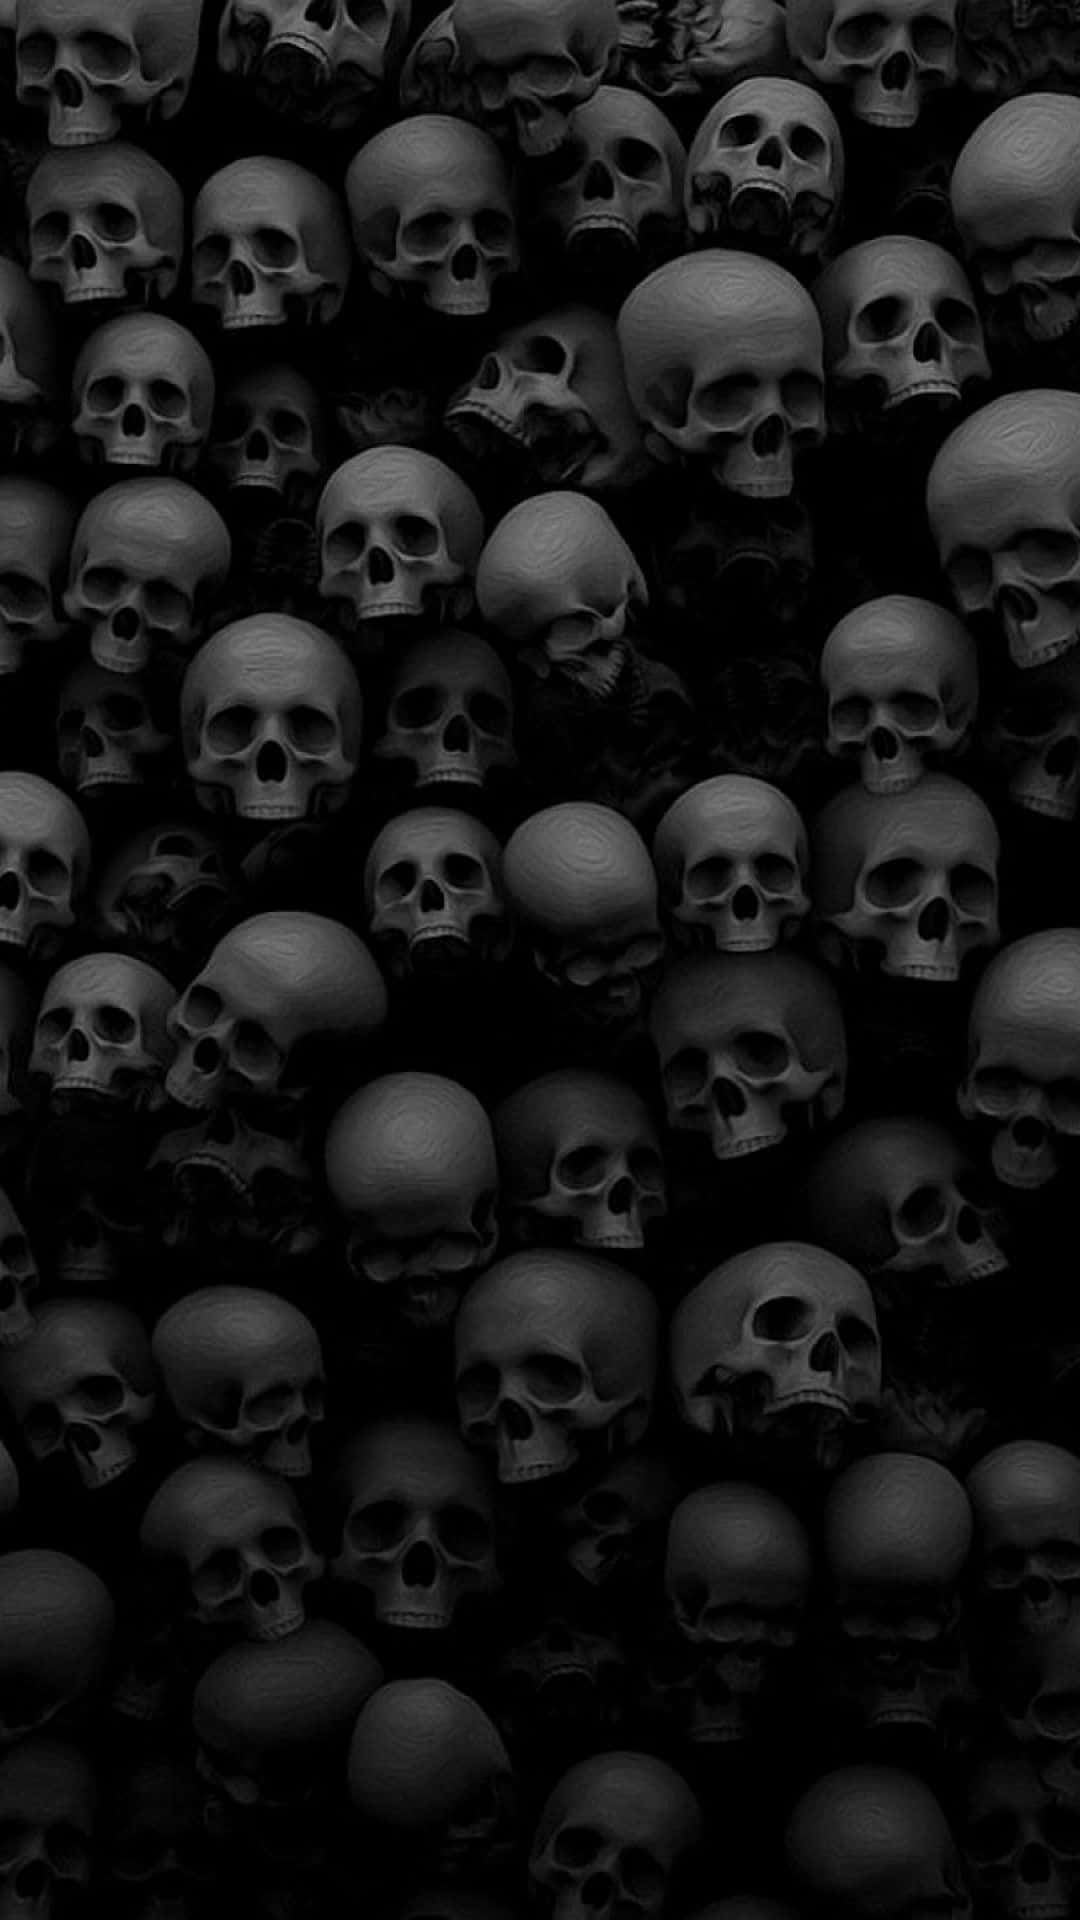 A Black Skull Wall With Many Skulls In It Wallpaper